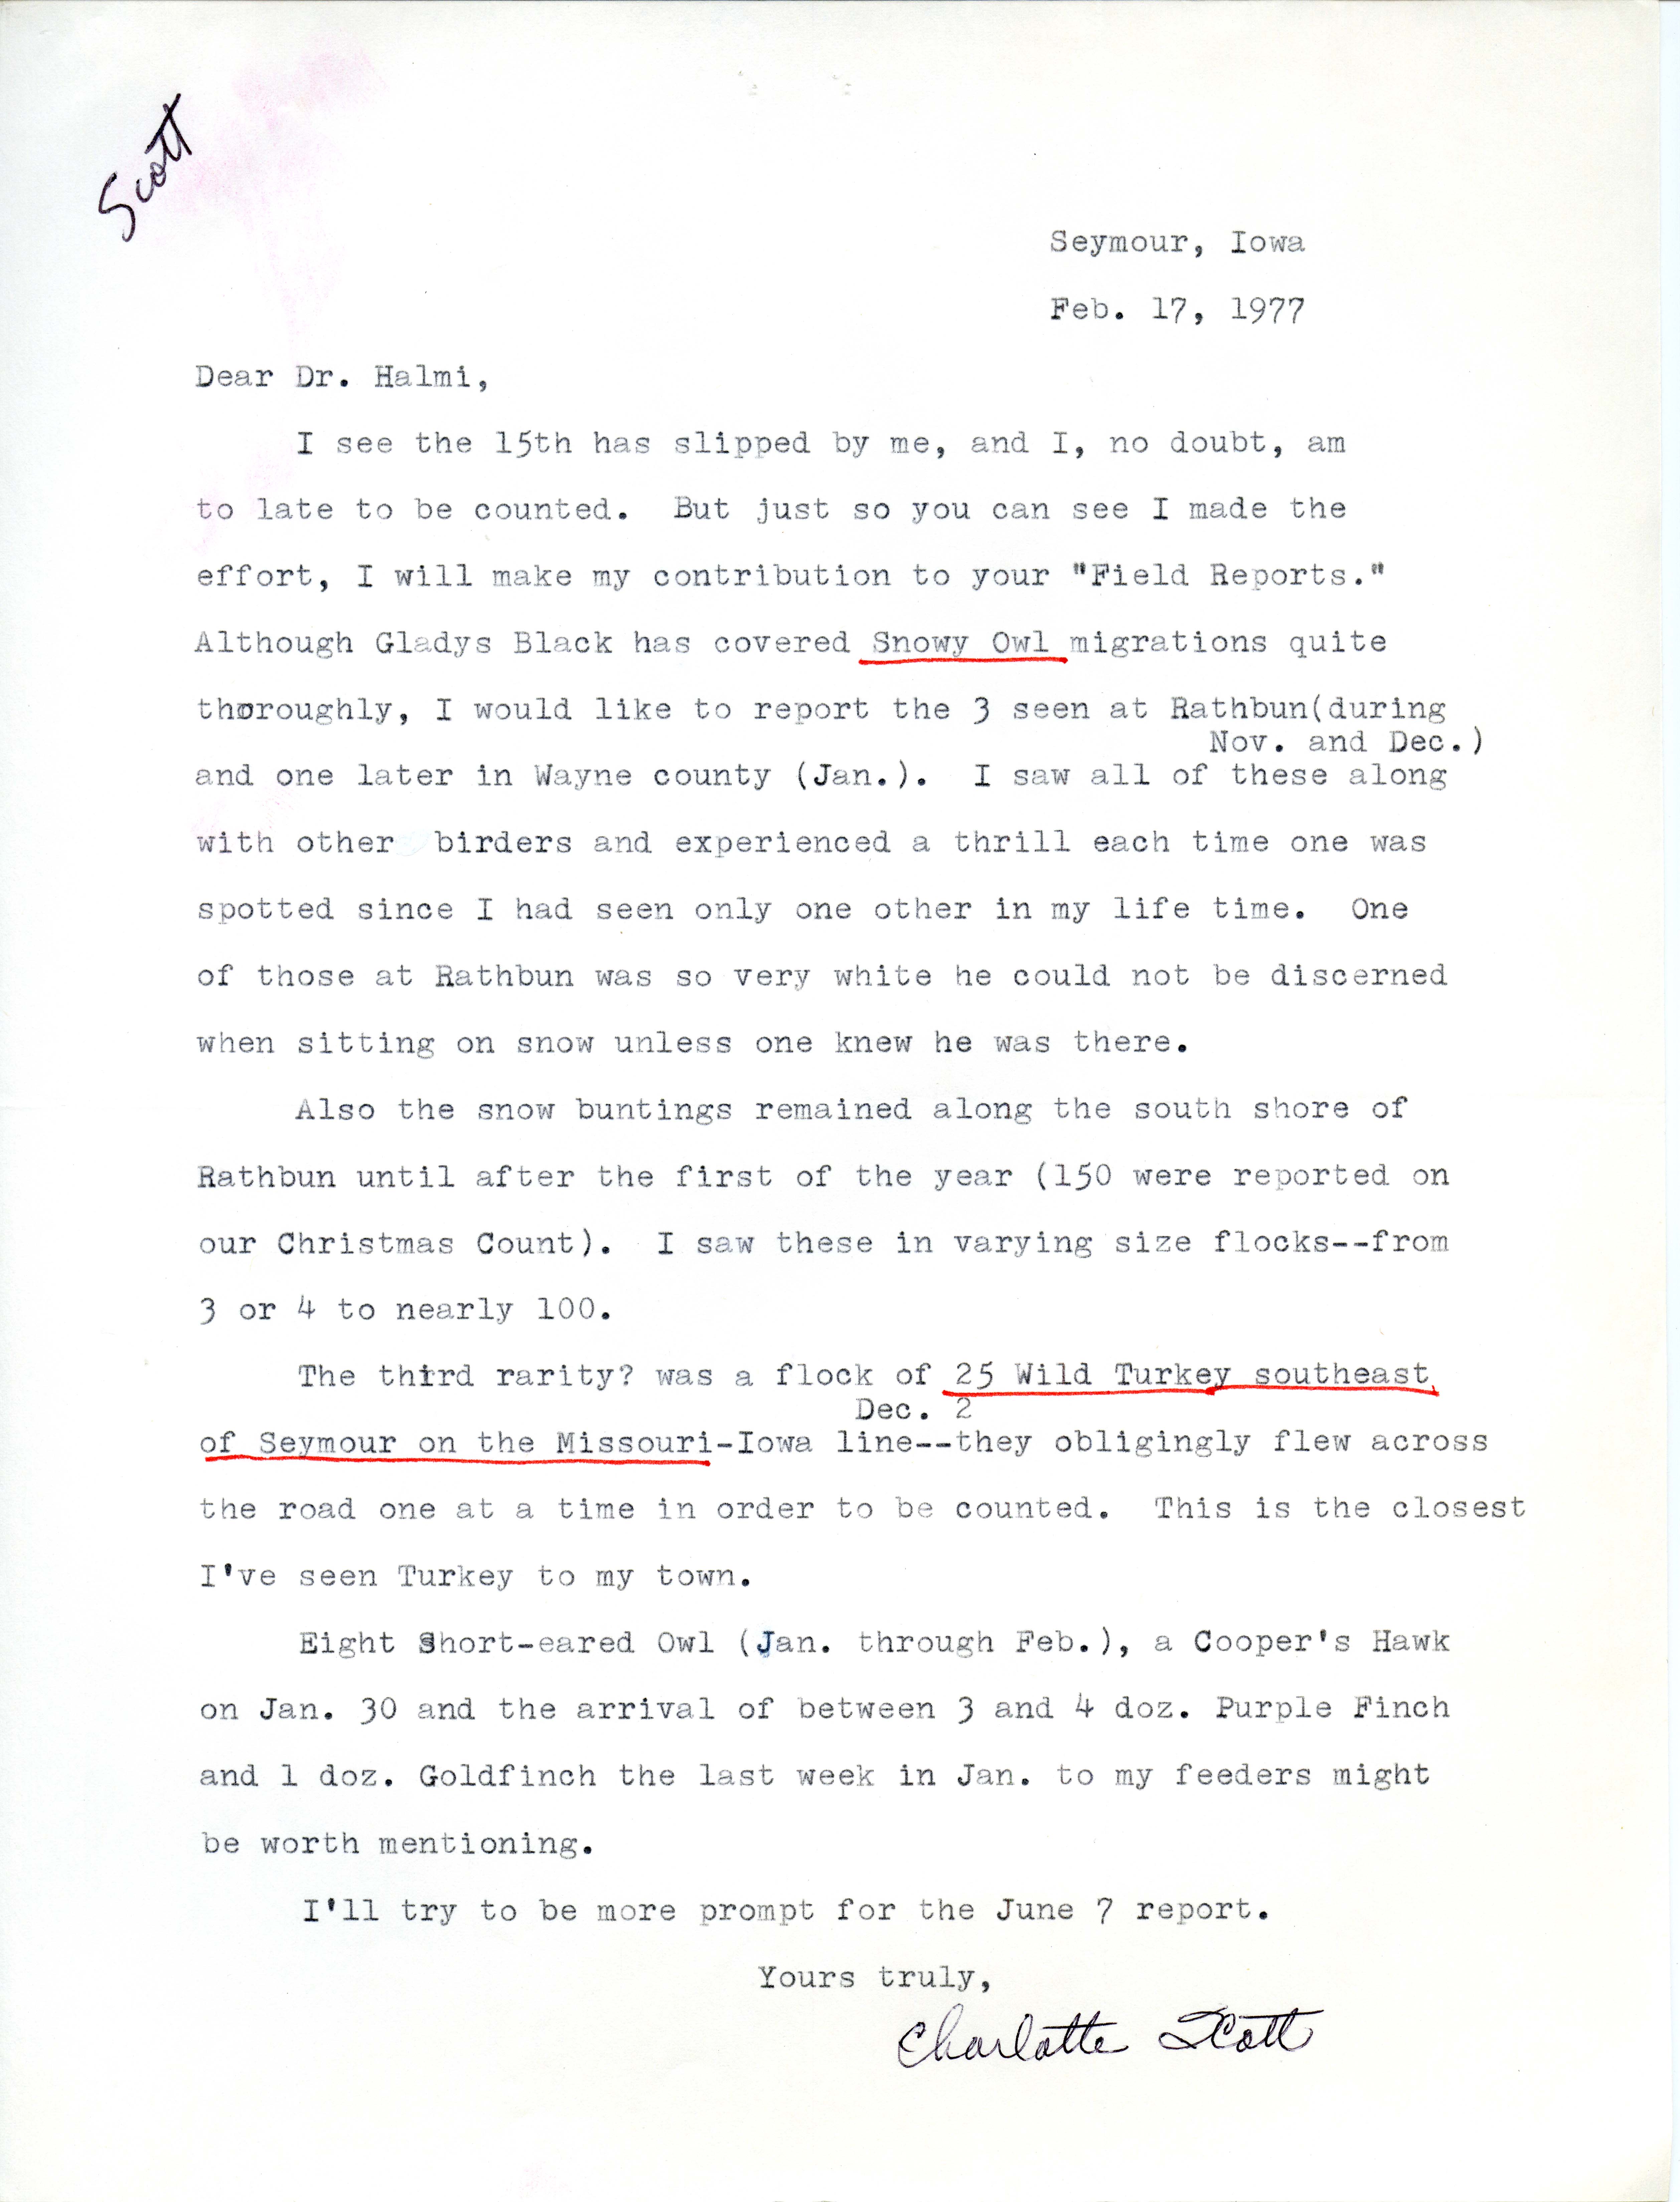 Charlotte Scott letter to Nicholas S. Halmi regarding bird sightings, February 17, 1977